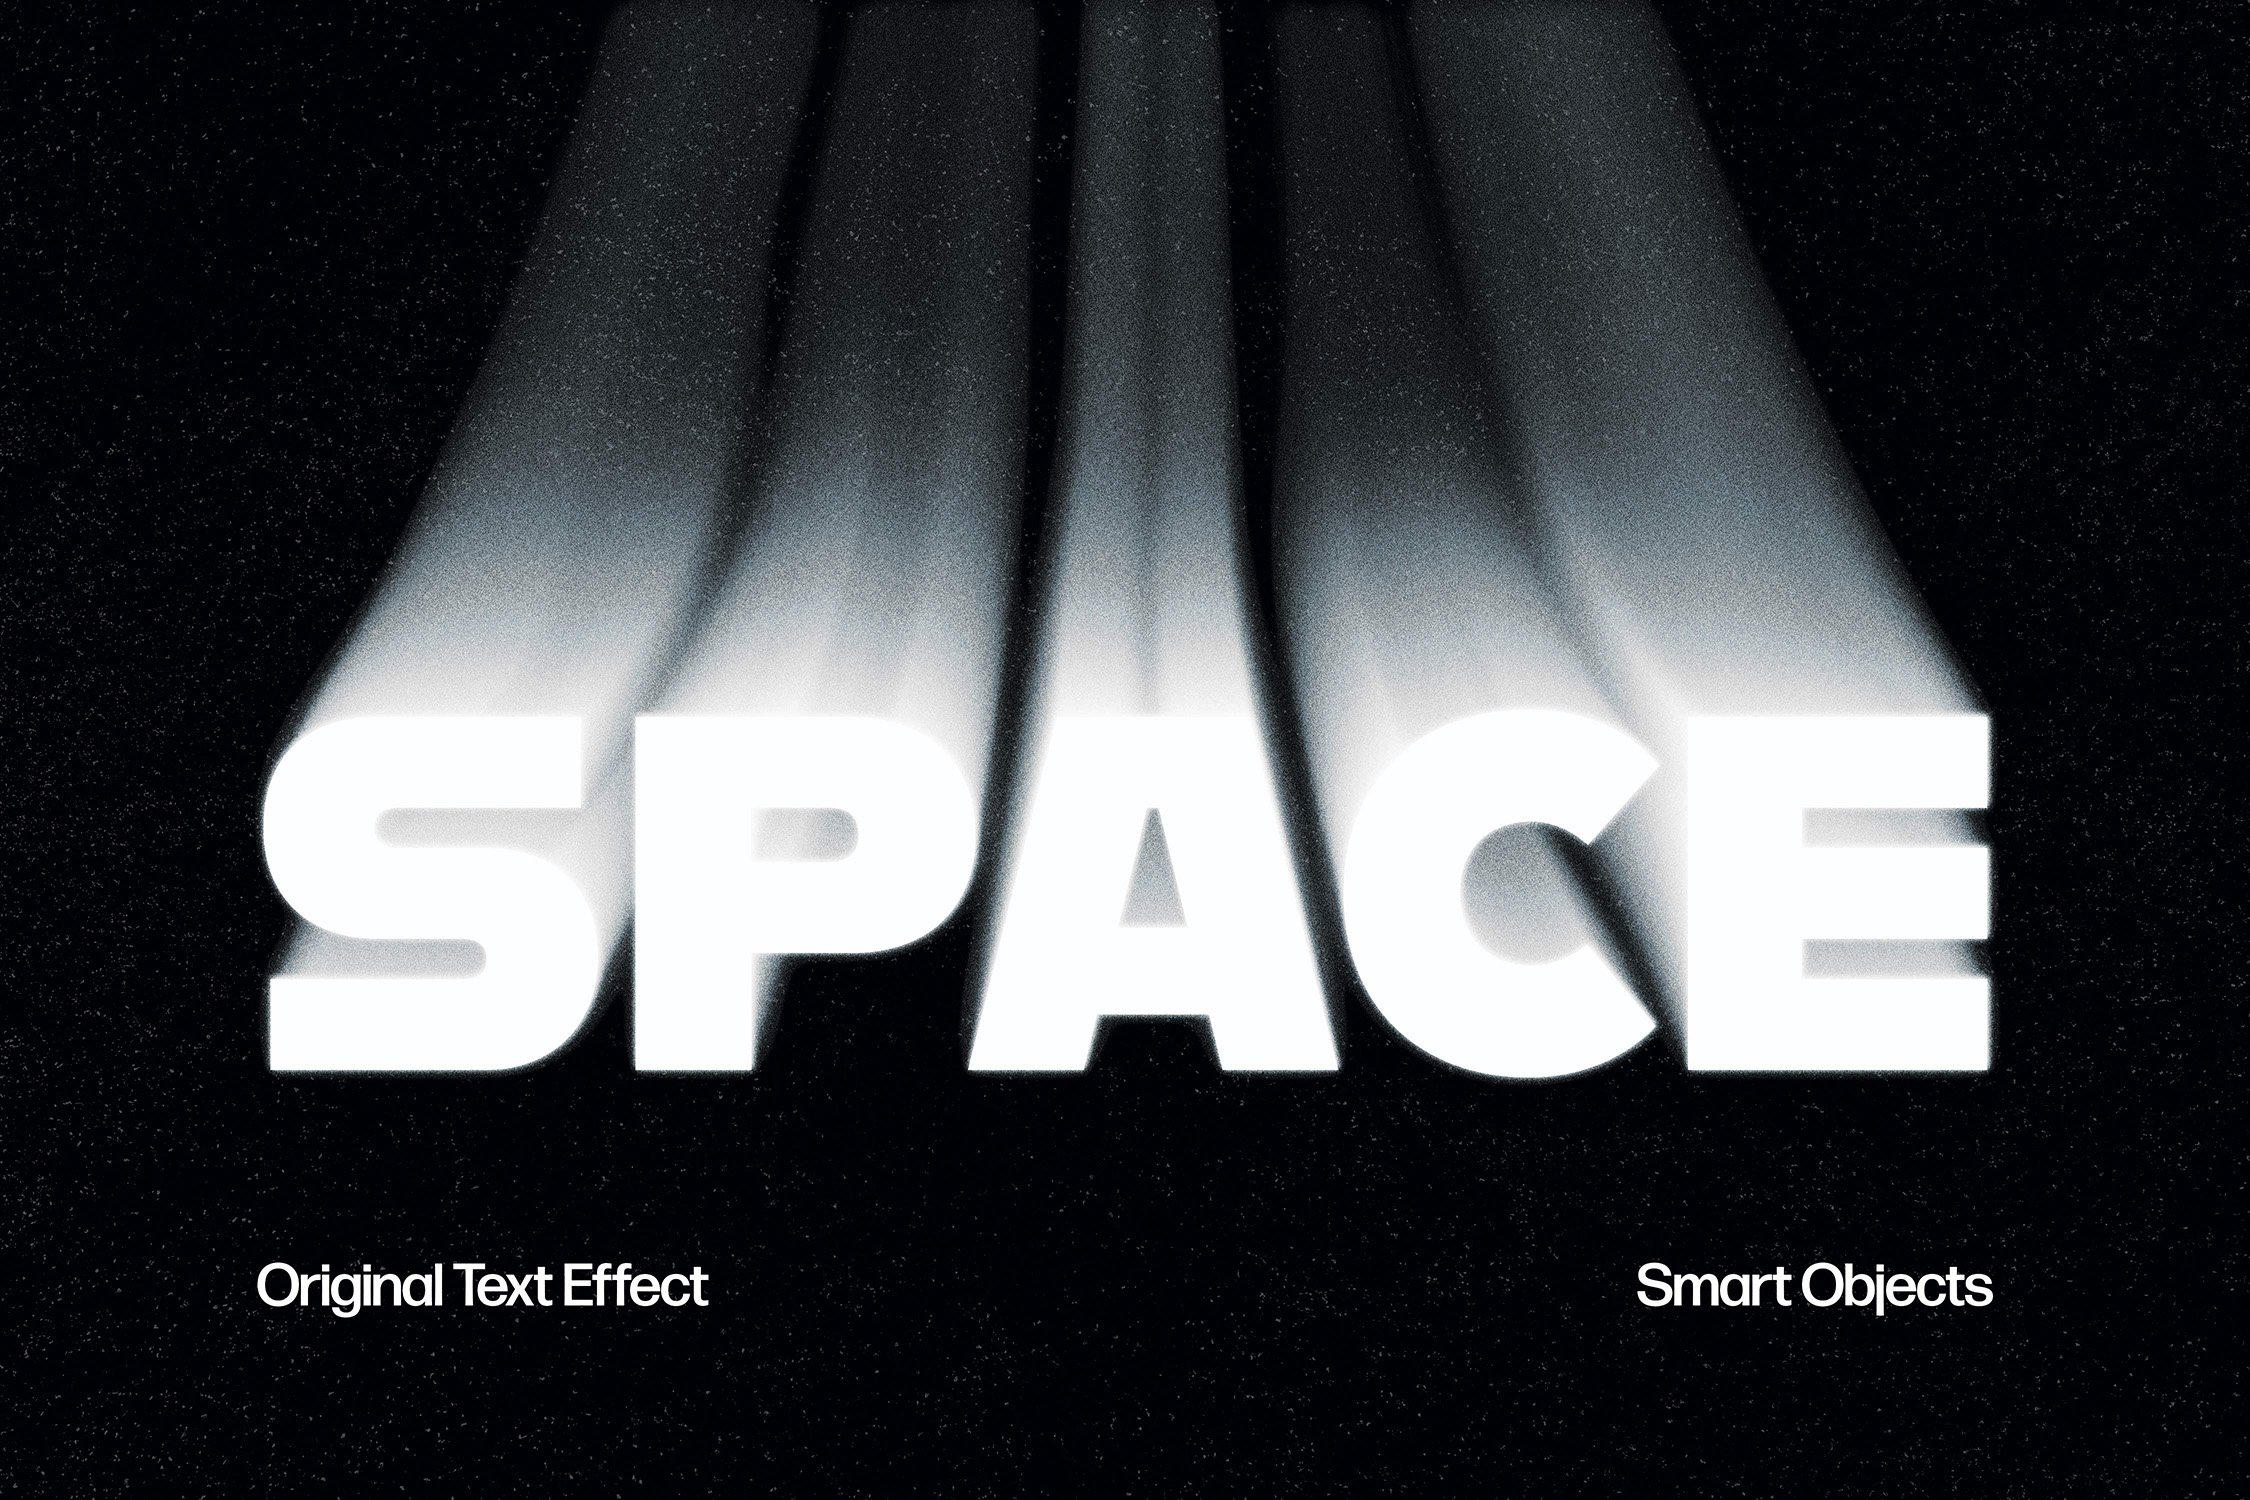 SPACE WARS TEXT EFFECT Graphic by Neyansterdam17 · Creative Fabrica